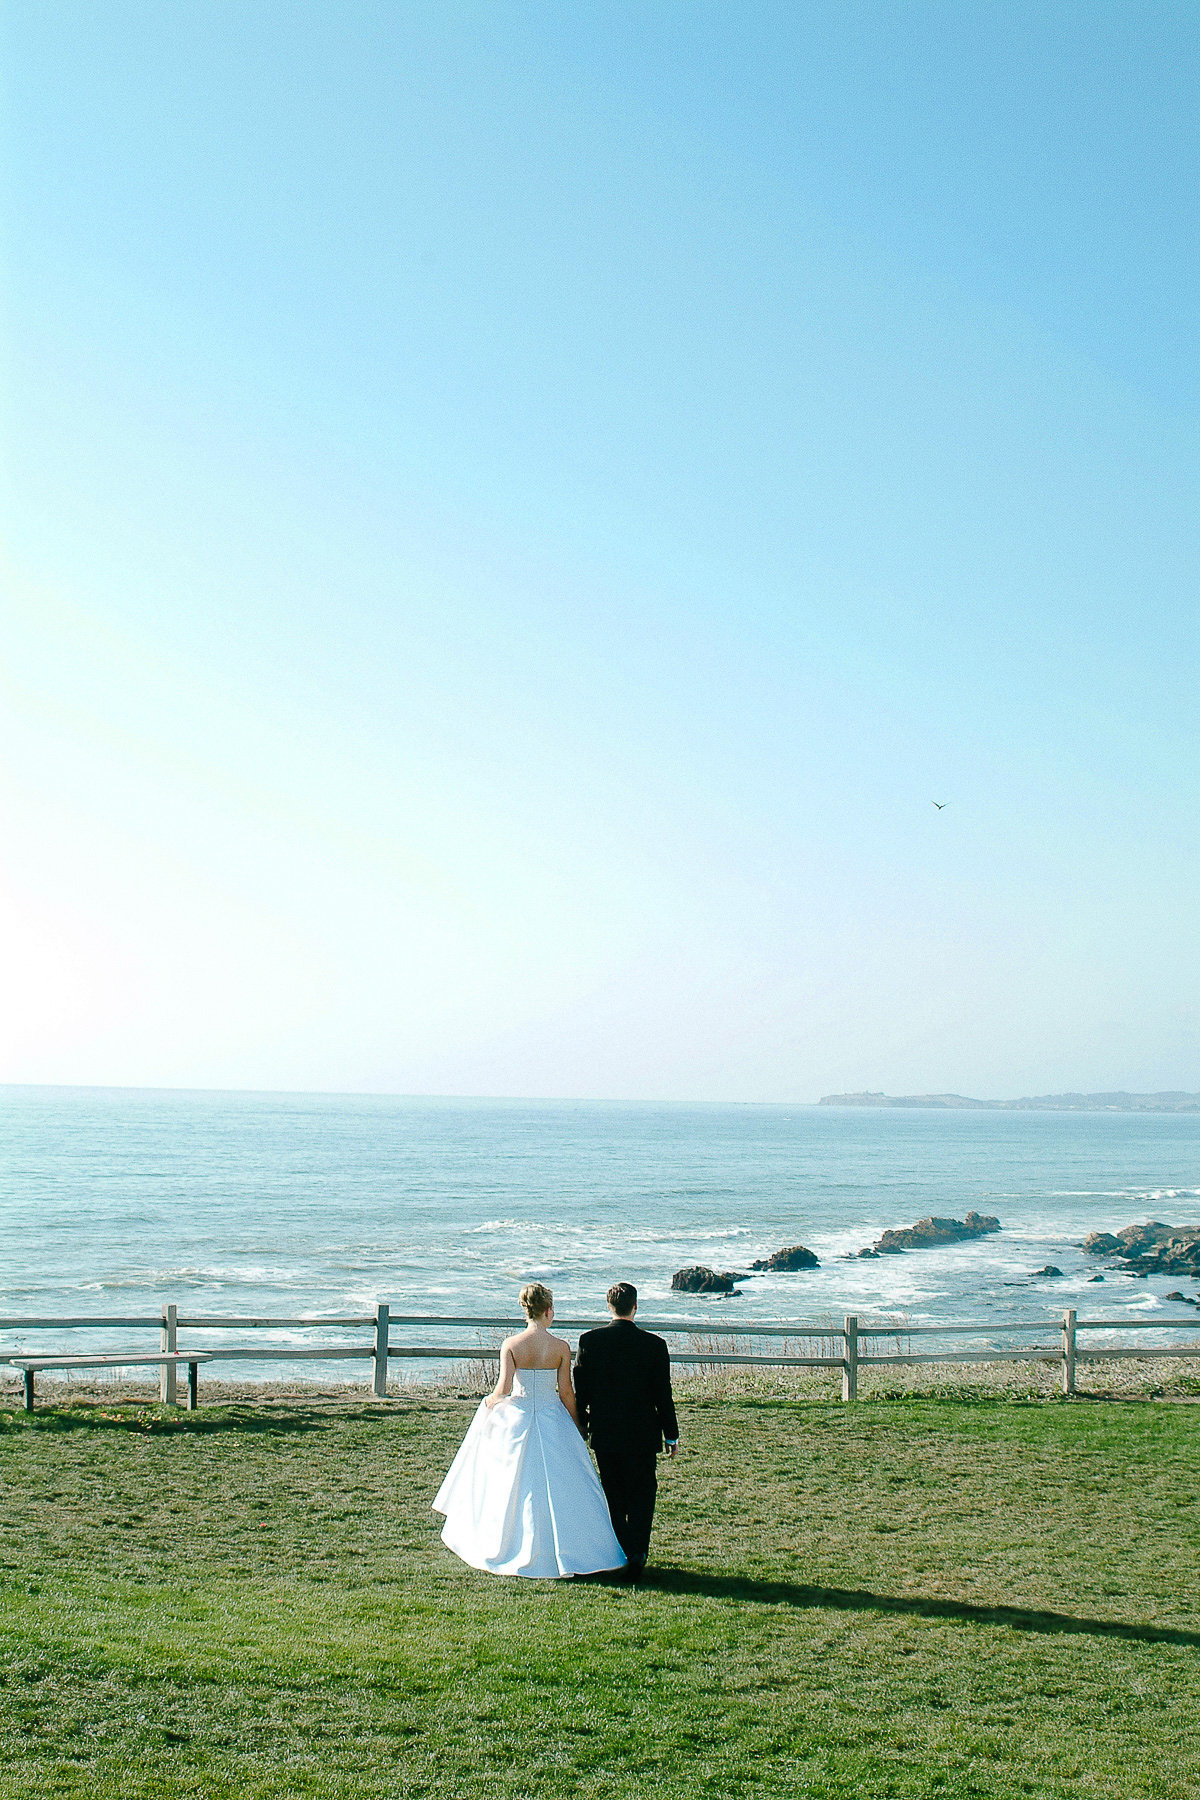 An oceanside wedding at the Ritz-Carlton in Half Moon Bay.